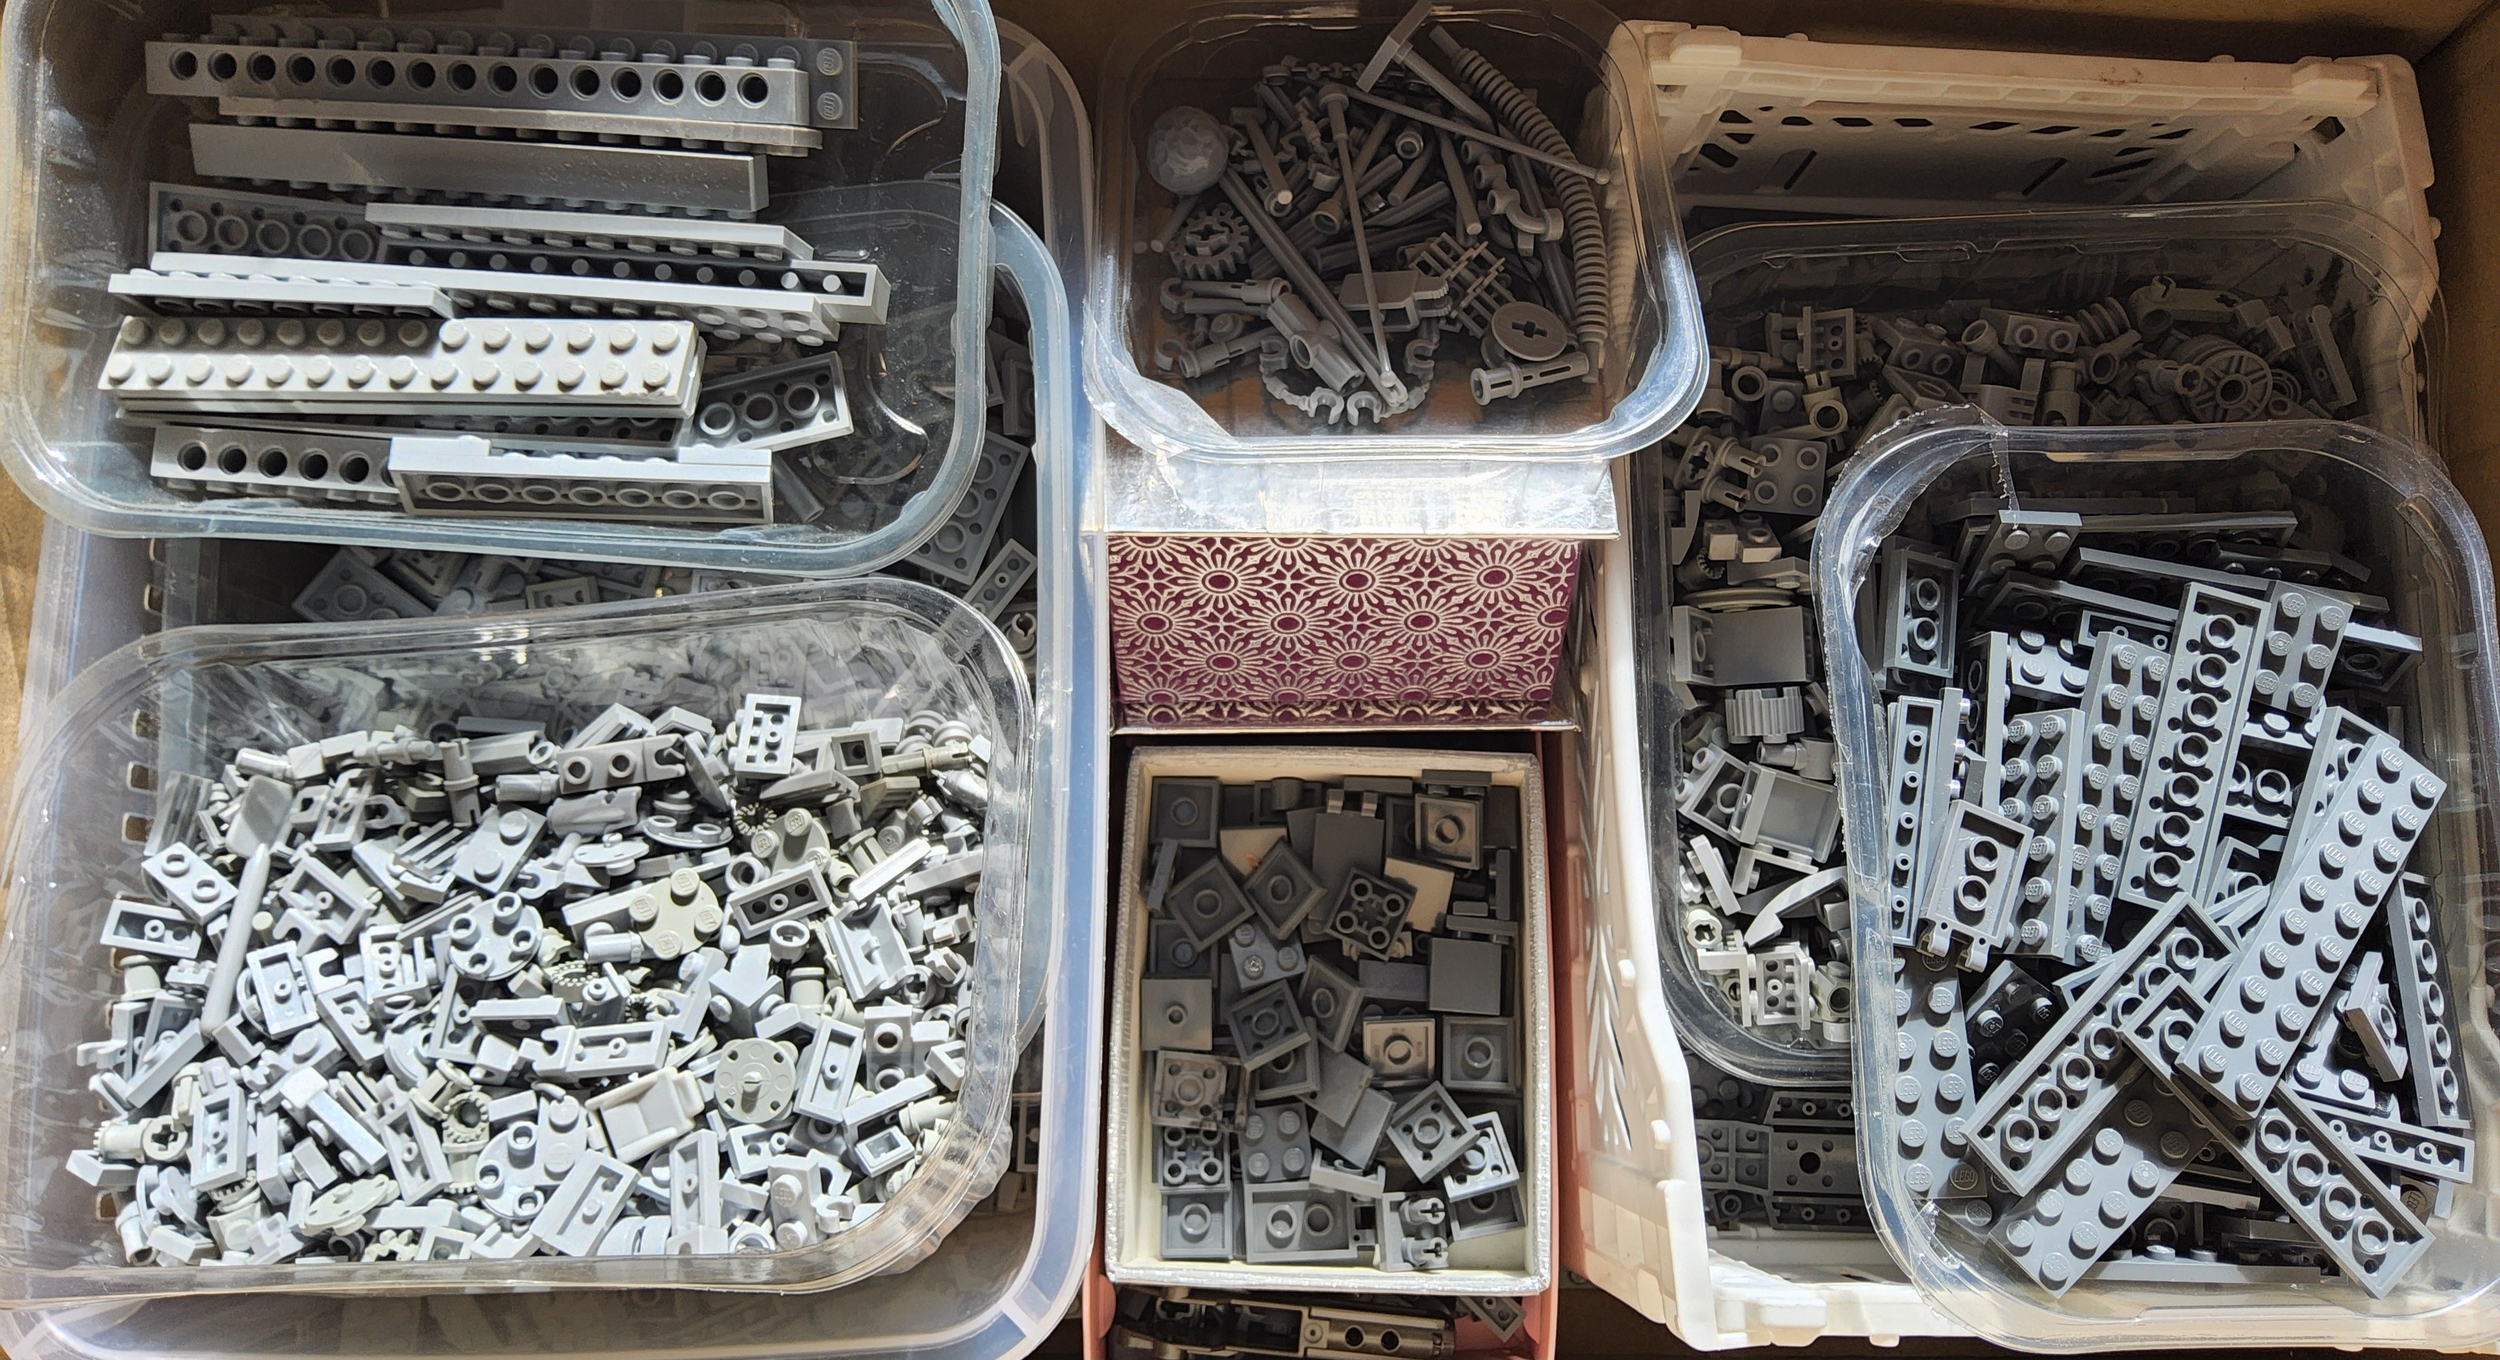 Lego - a Quanity grey coloured bricks, pieces, accessories, etc. Split into individual tubs.